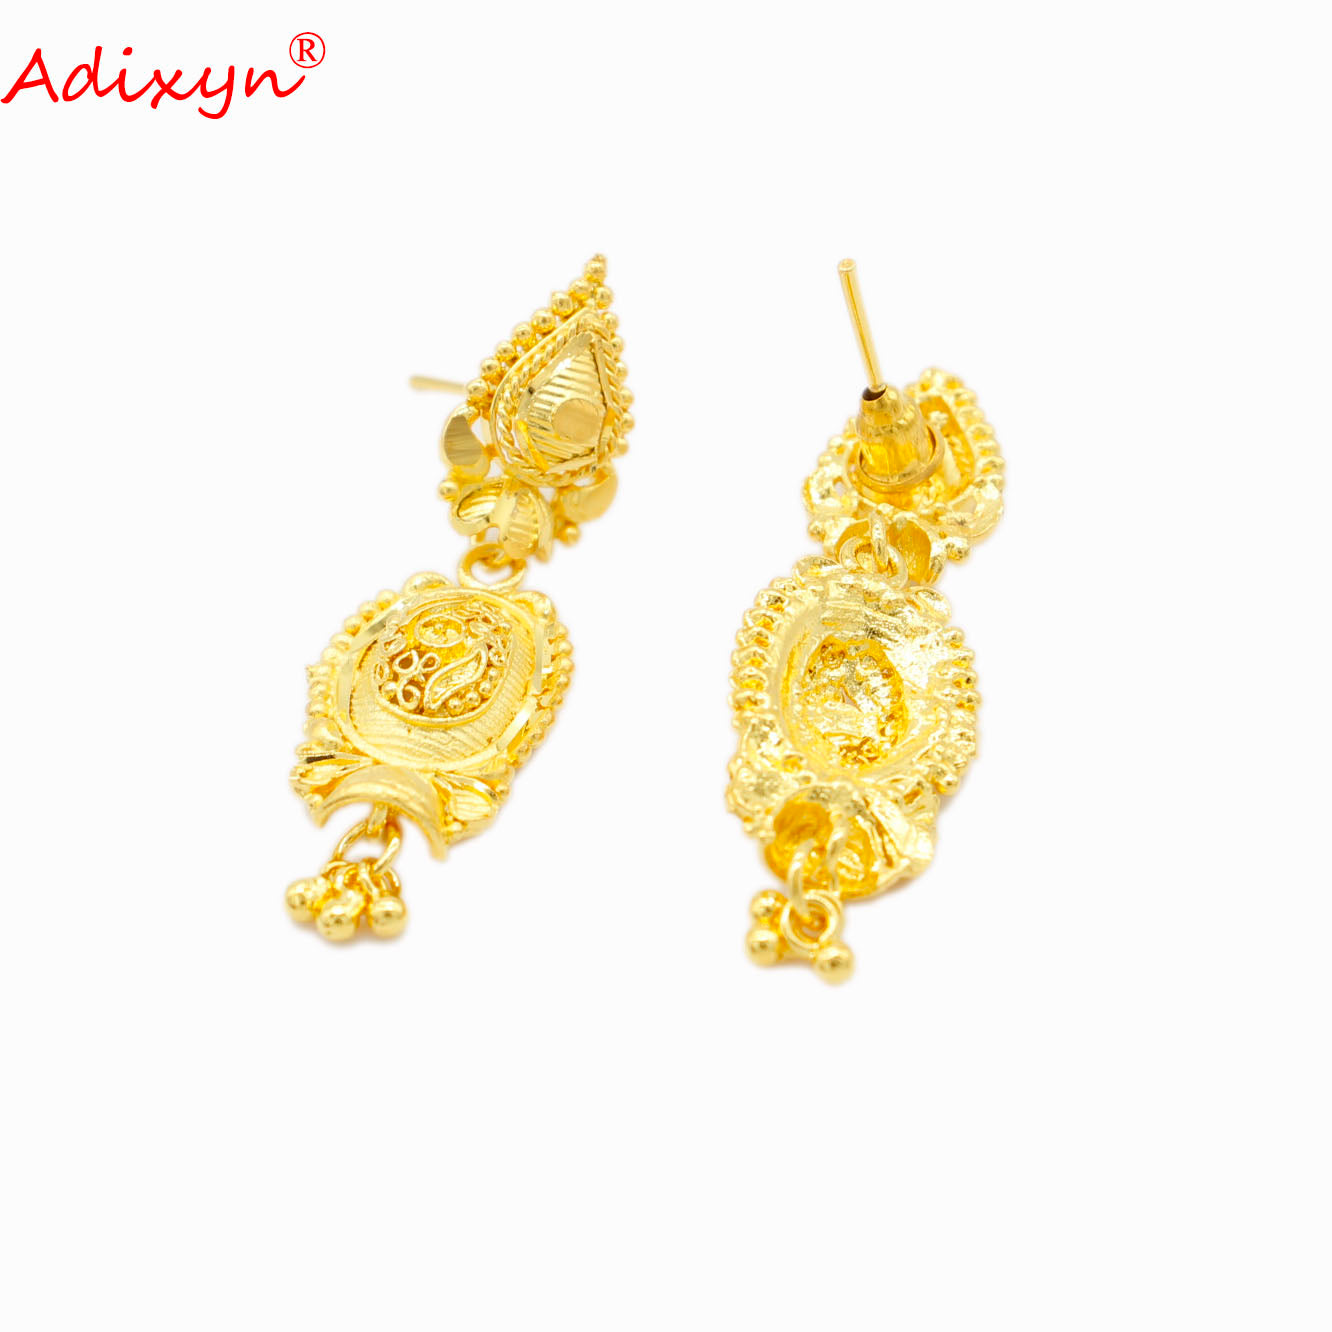 Adixyn Dubai Luxury 24K Gold Color/Copper Earrings Necklace Jewelry - ONEZINOTTA , jewelery that shines like gold...